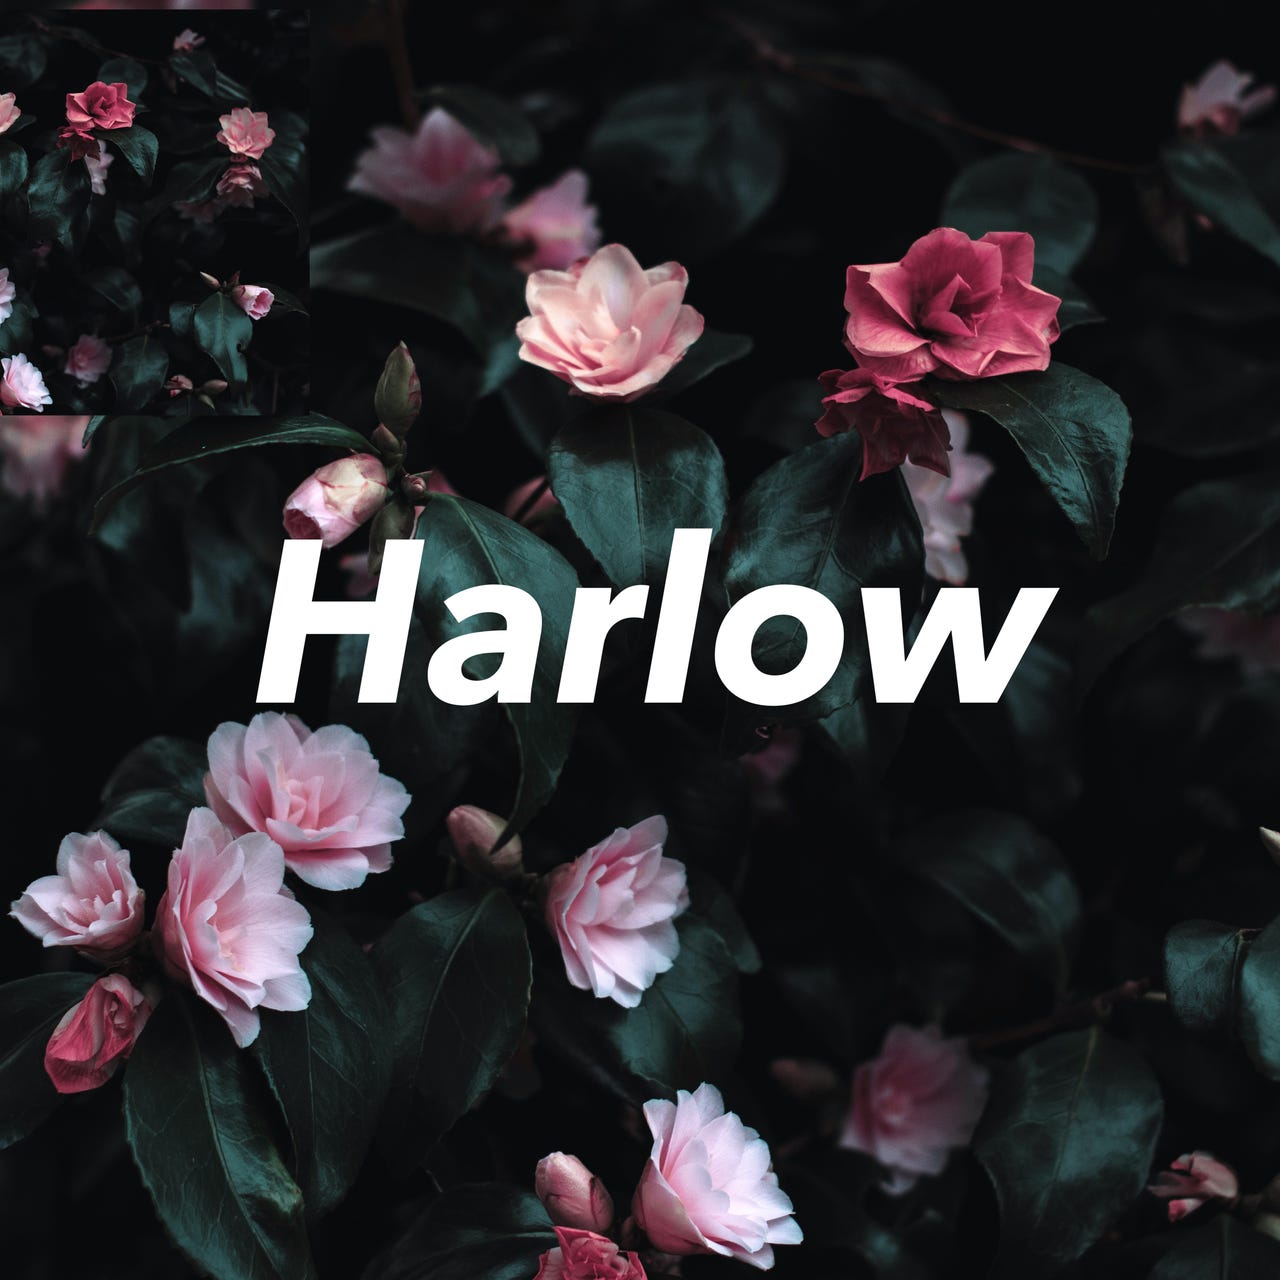 Harlow